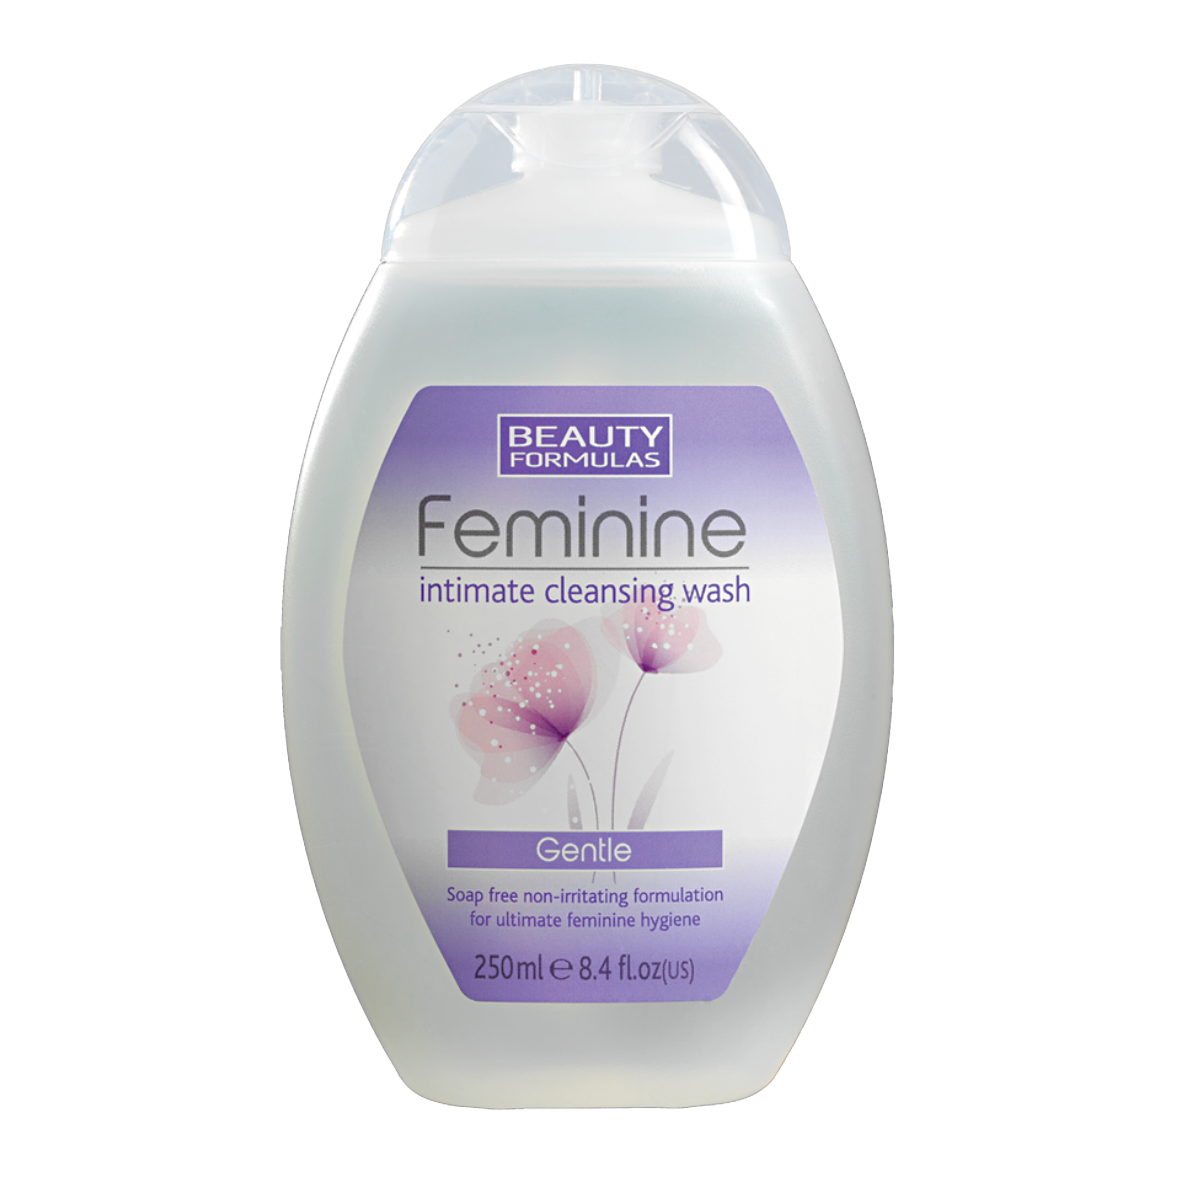 Feminine intimate Cleansing wash gentle original.